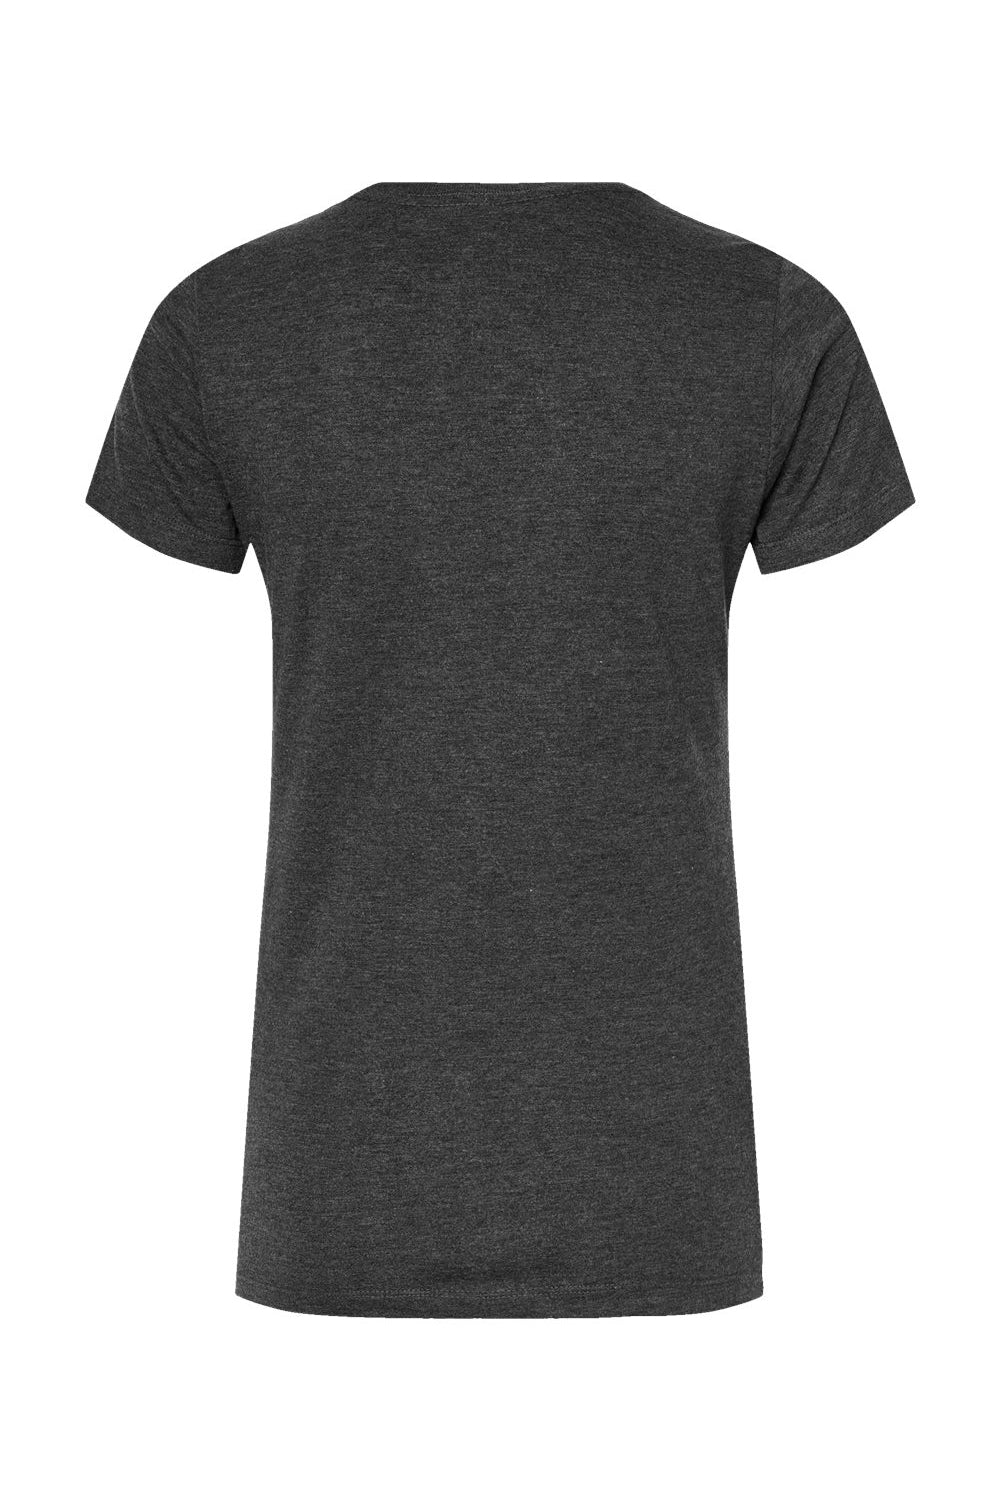 Tultex 542 Womens Premium Short Sleeve Crewneck T-Shirt Heather Black Flat Back